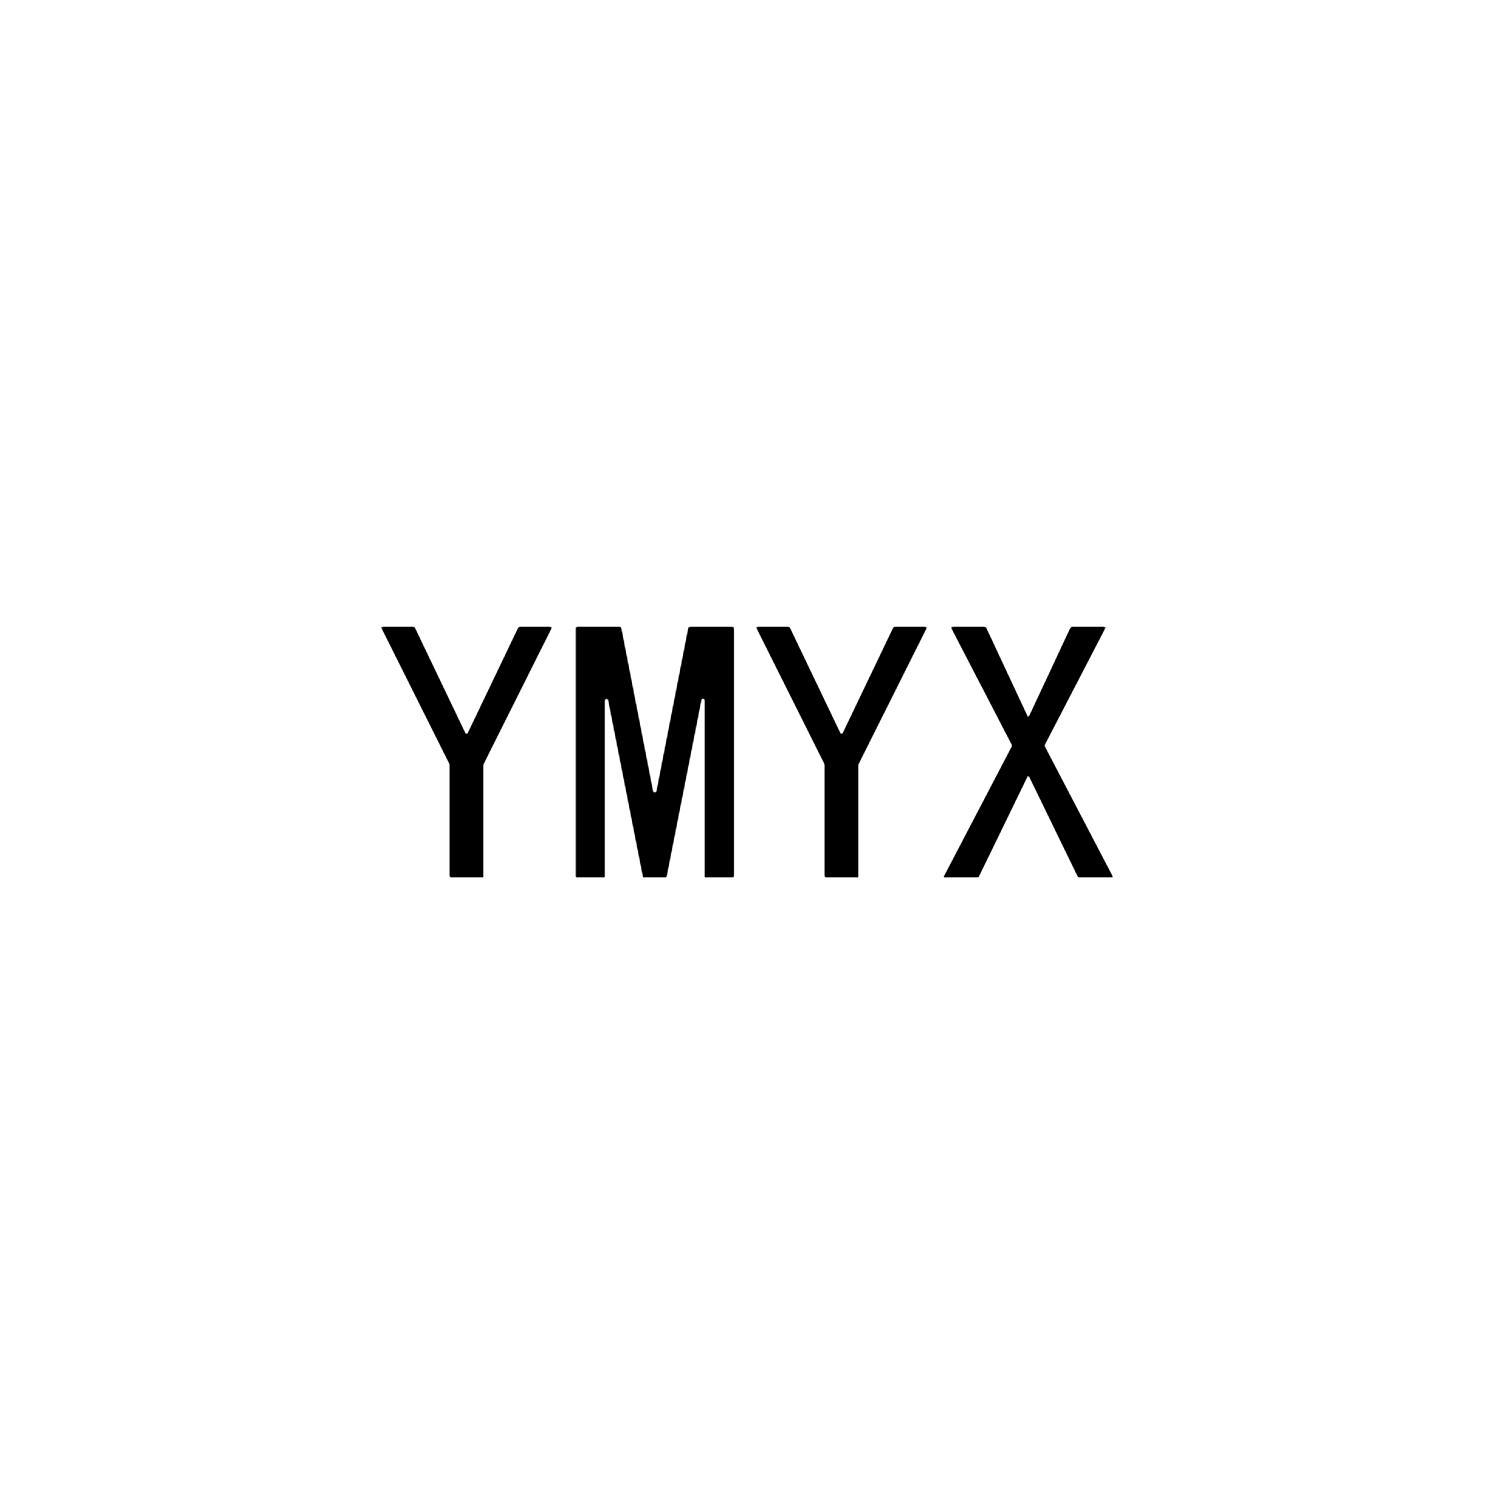 YMYX